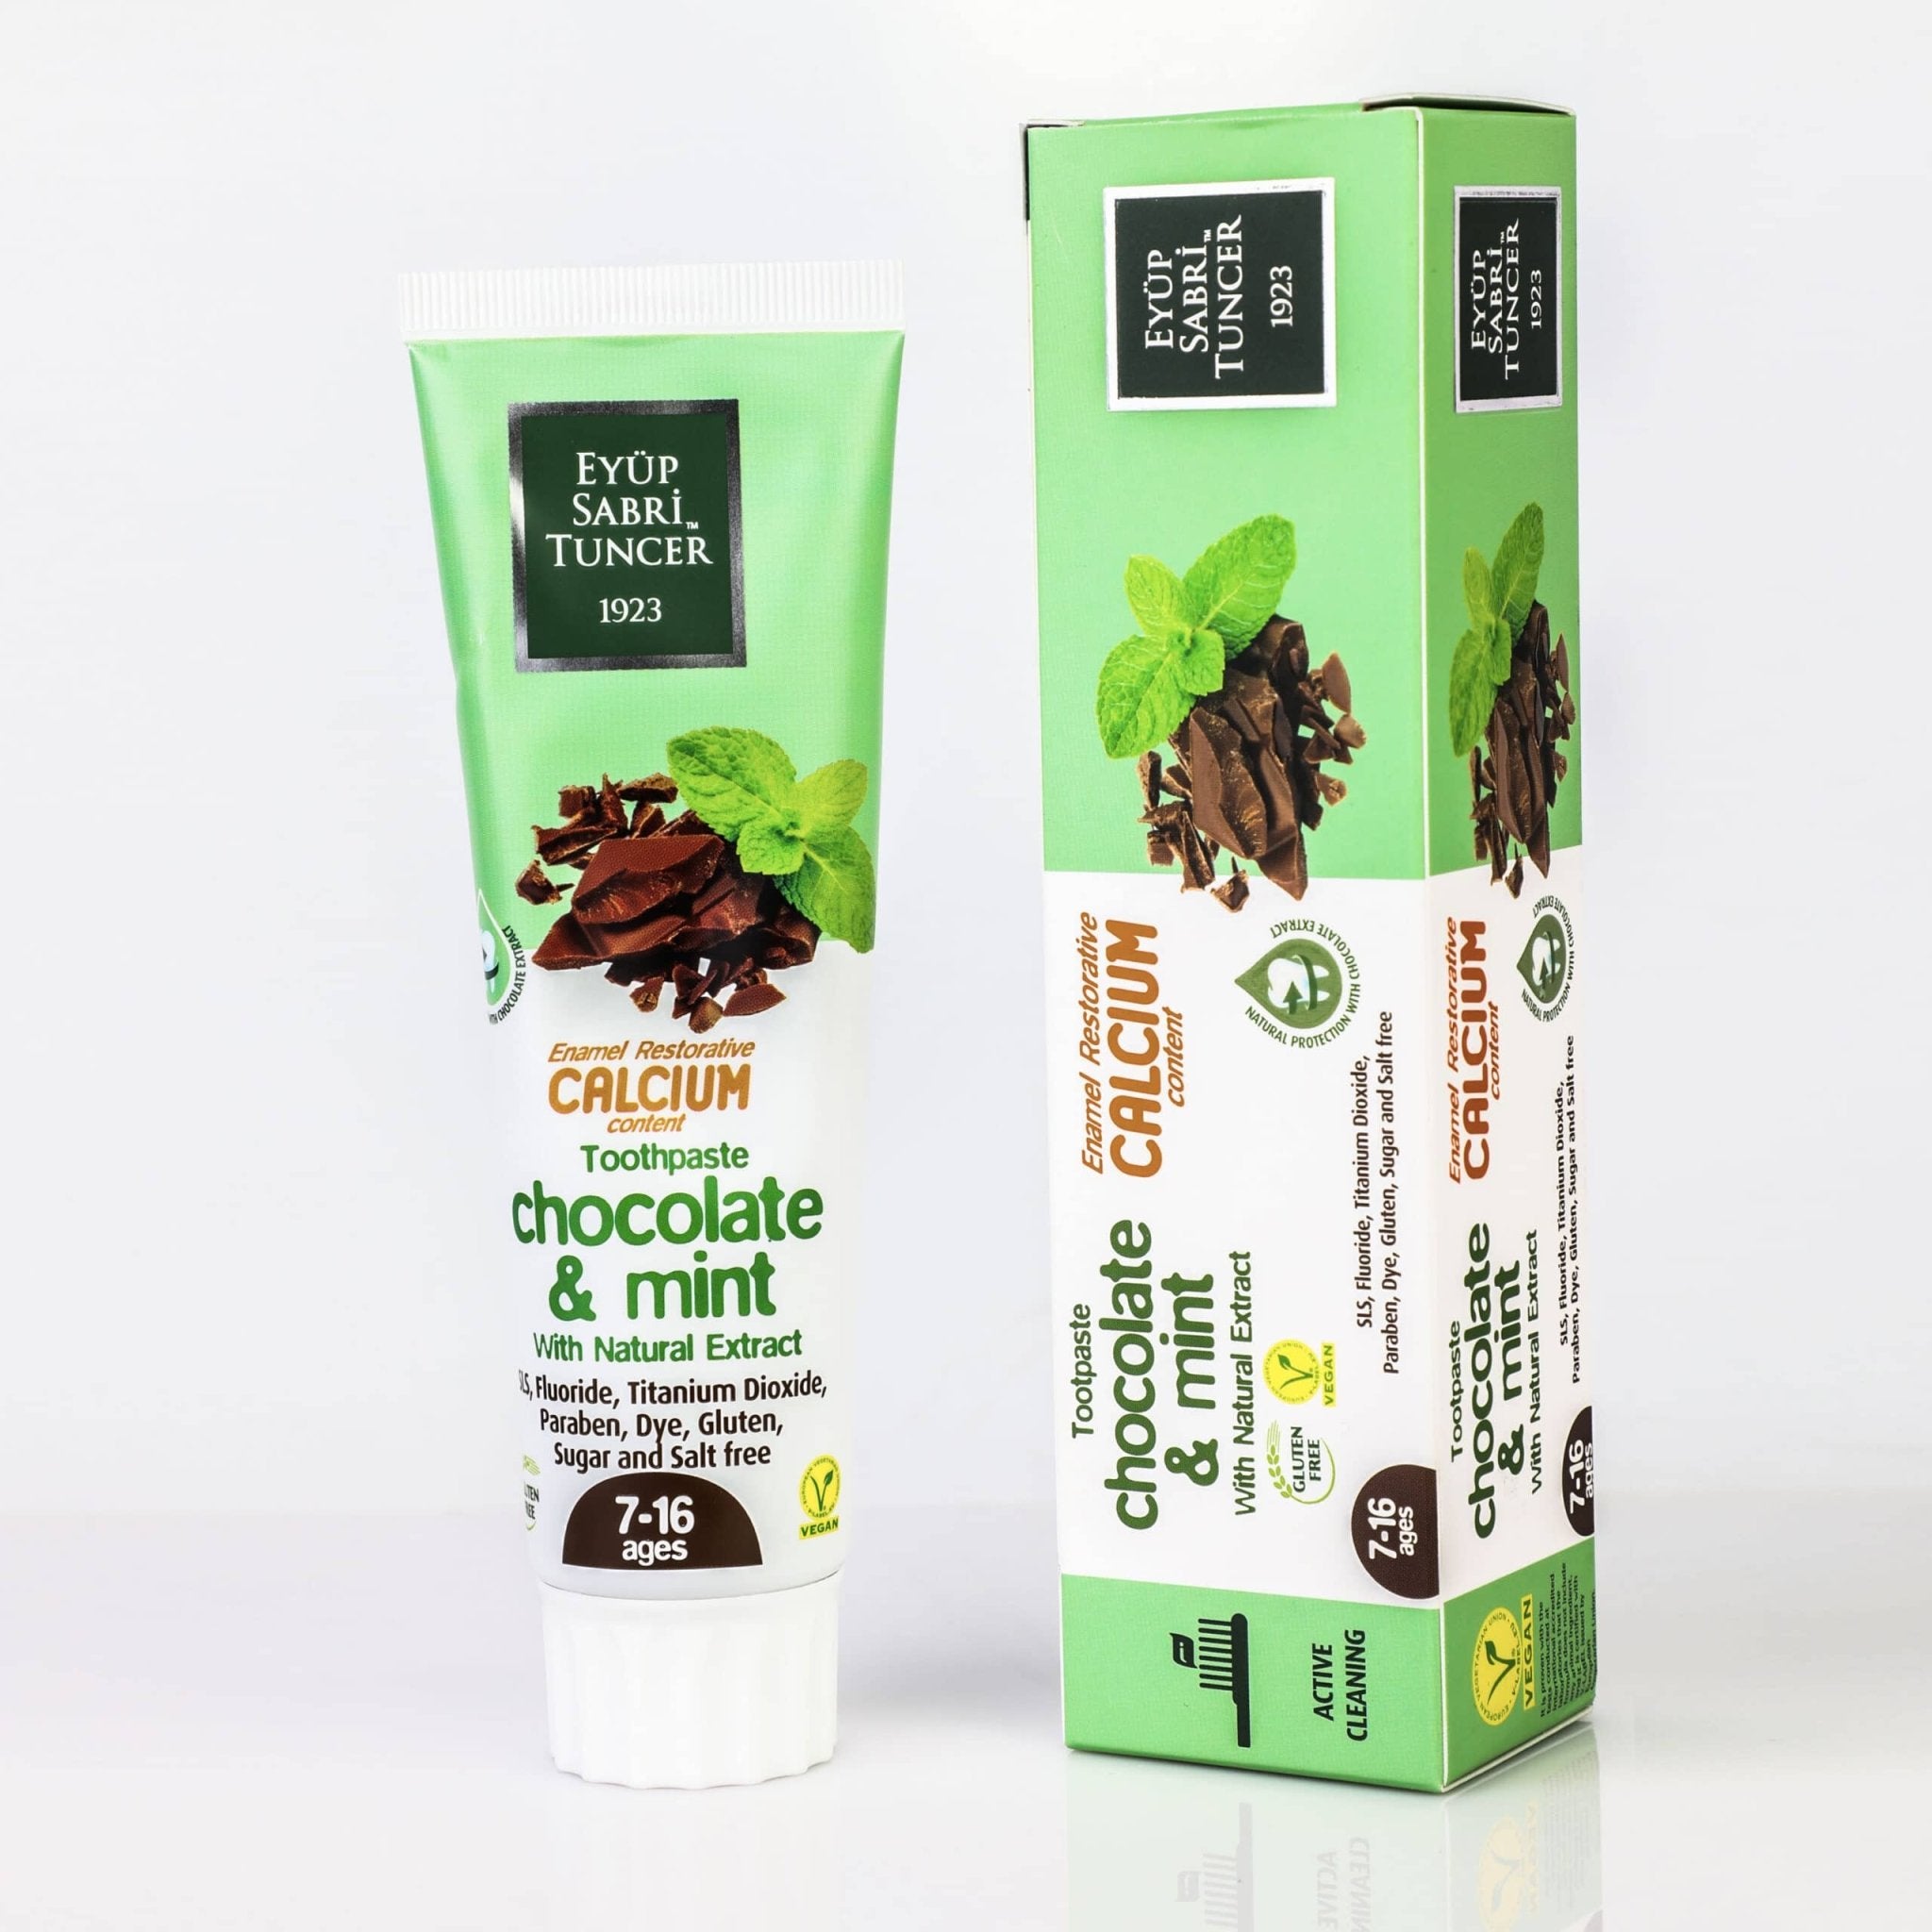 Eyup Sabri Tuncer Toothpaste (Chocolate & Mint) - Aytac Foods